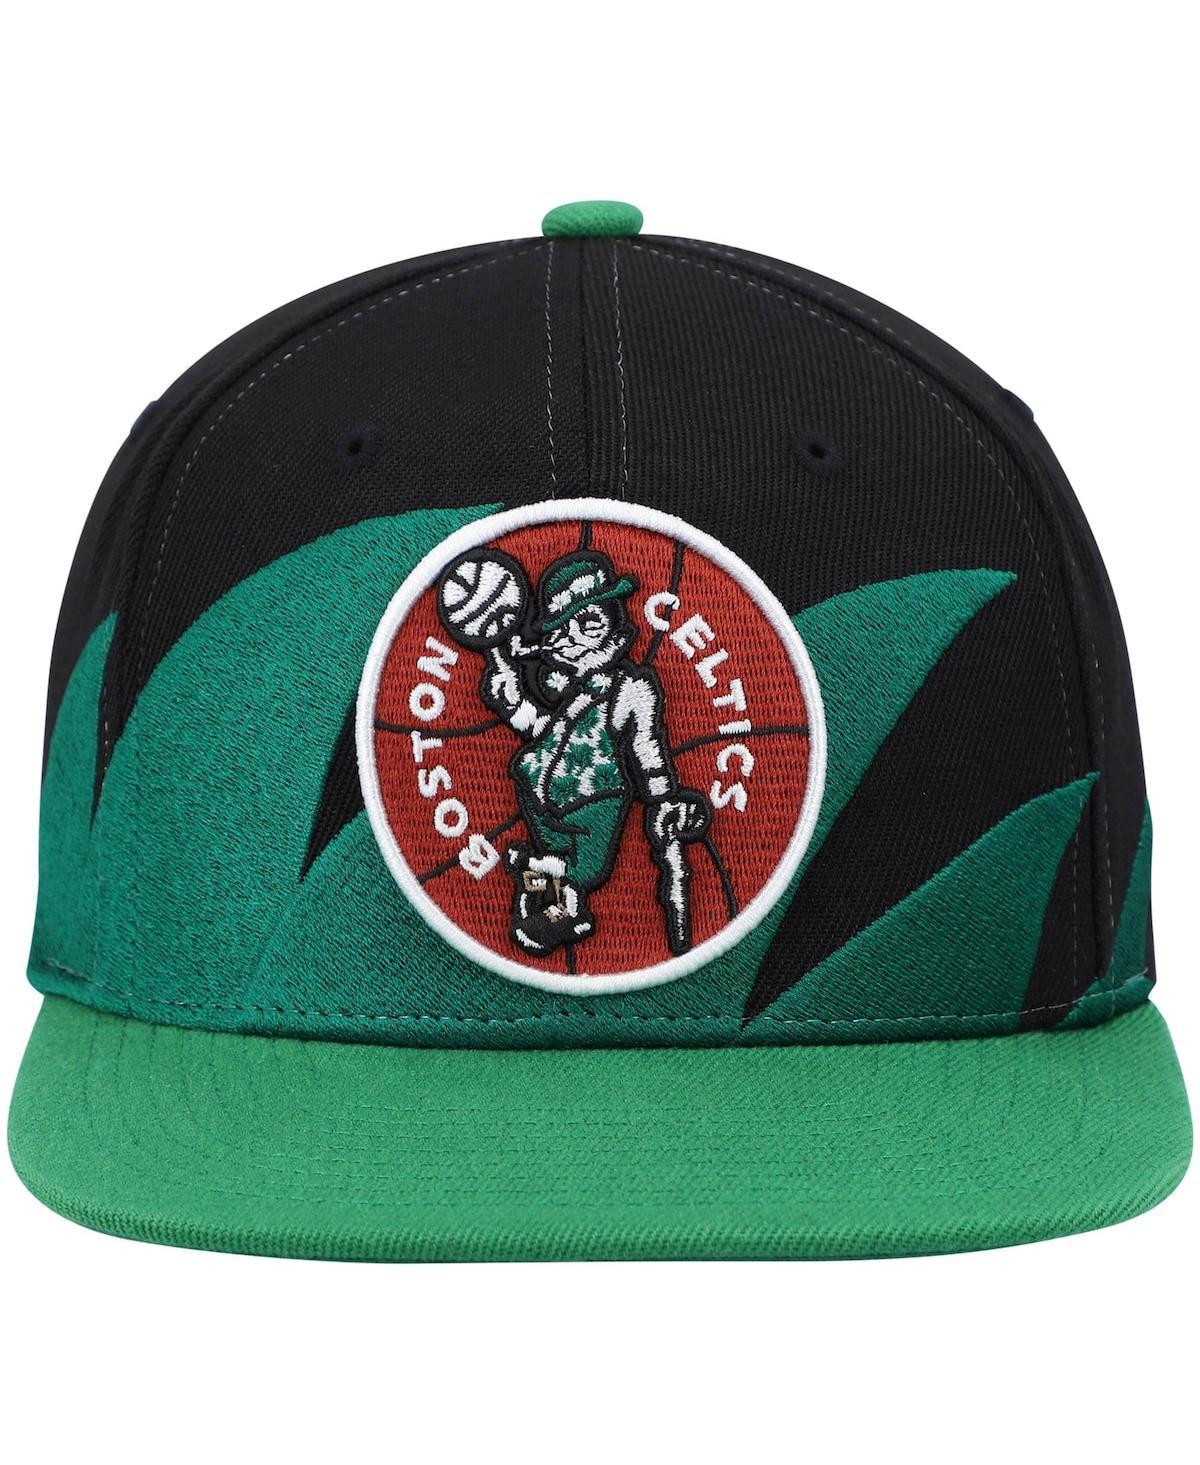 Men's Mitchell & Ness Green/Navy Dallas Mavericks Hardwood Classics Two-Tone Snapback Hat